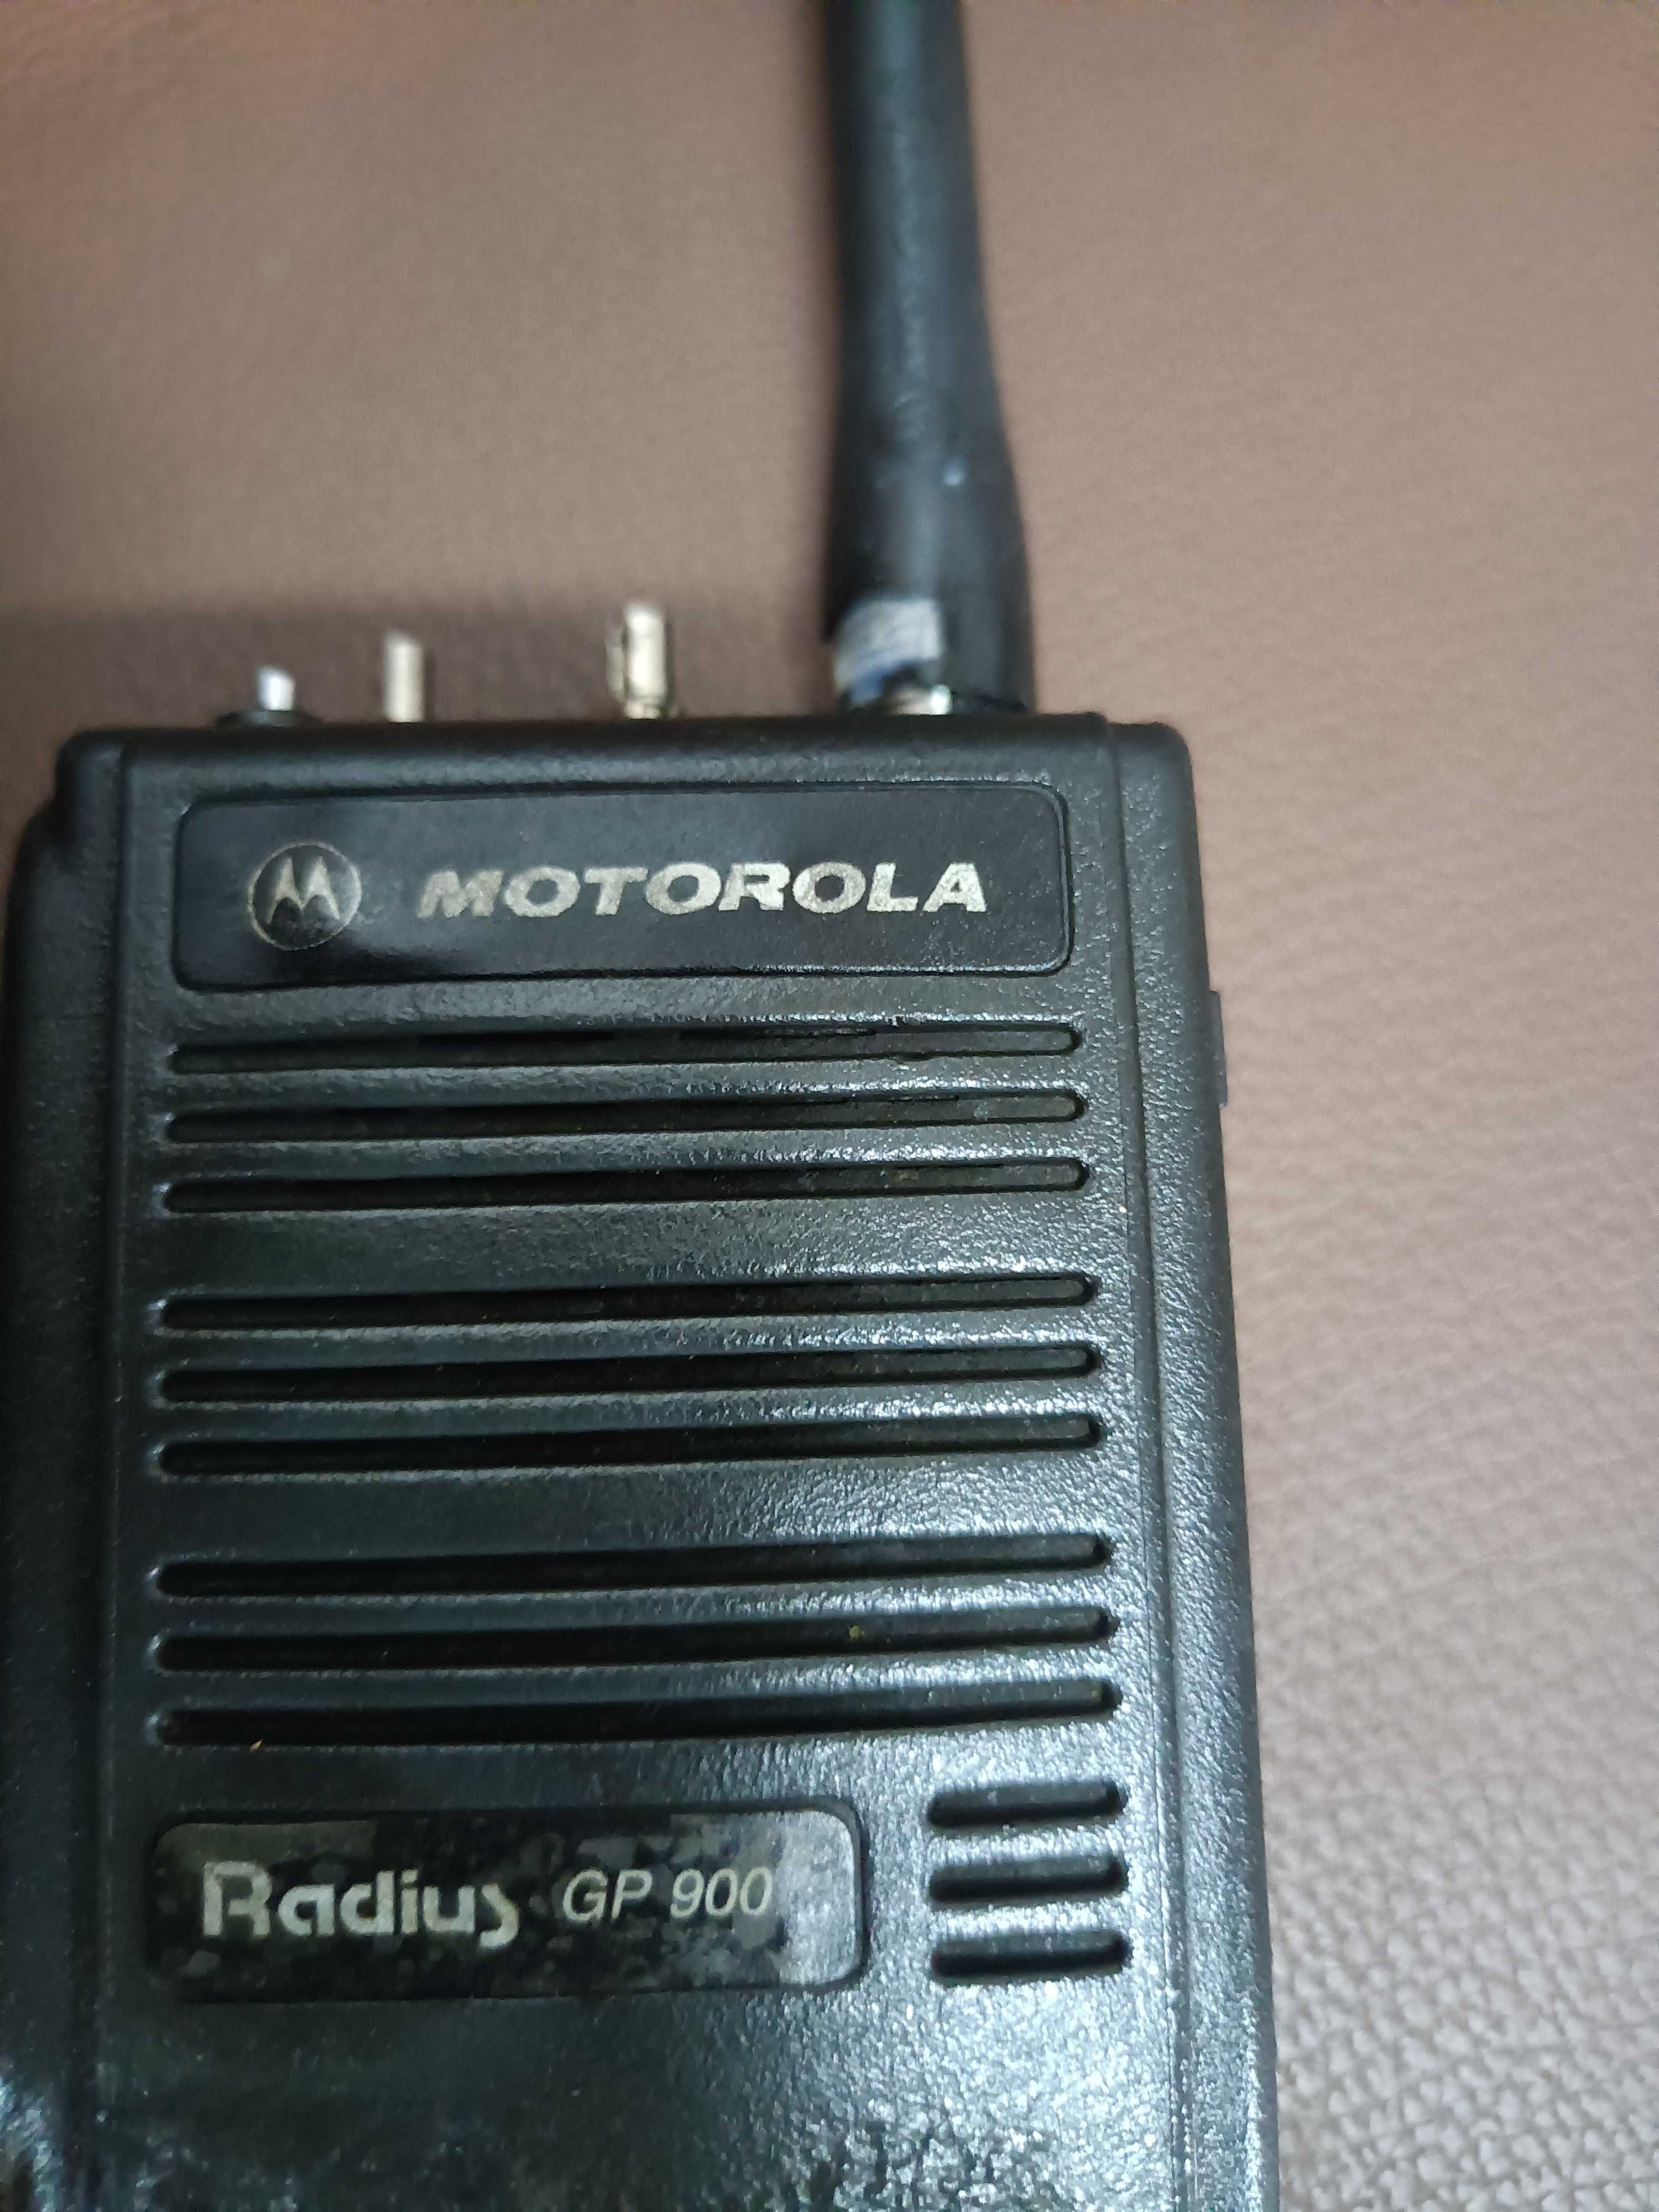 Radiotelefon Motorola